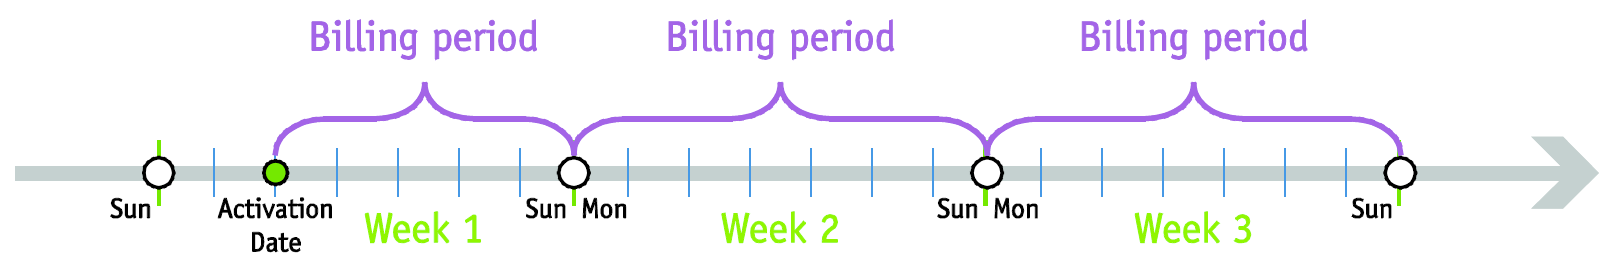 Weekly billing period